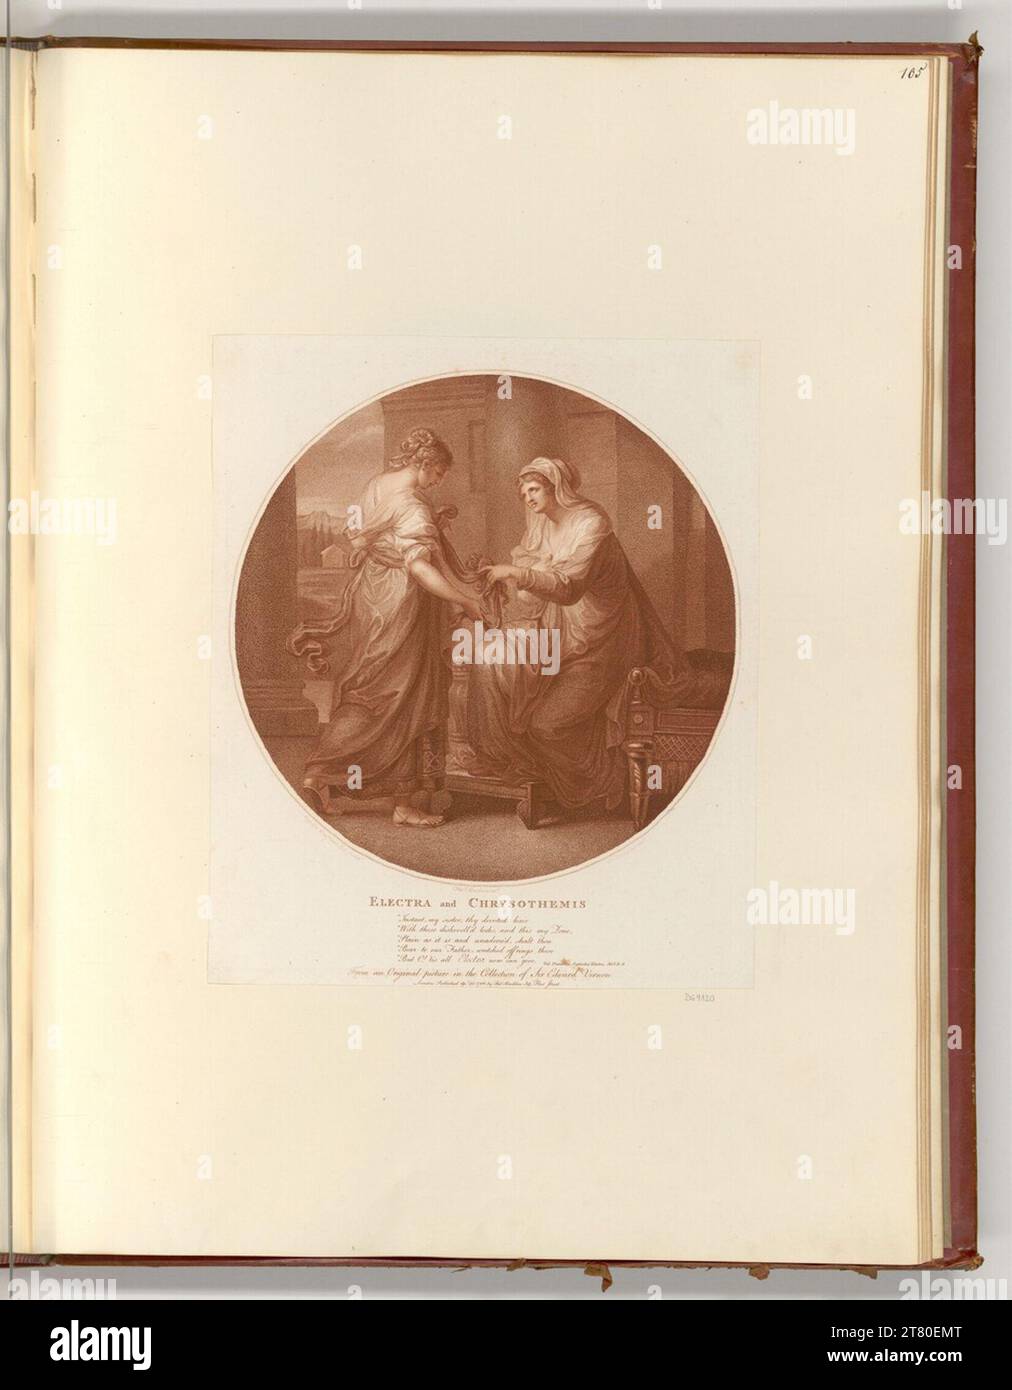 Maria Anna Angelika Catharina Kauffmann Electra und Chrysothemis. Etching, punctuation technology 1786 , 1786 Stock Photo